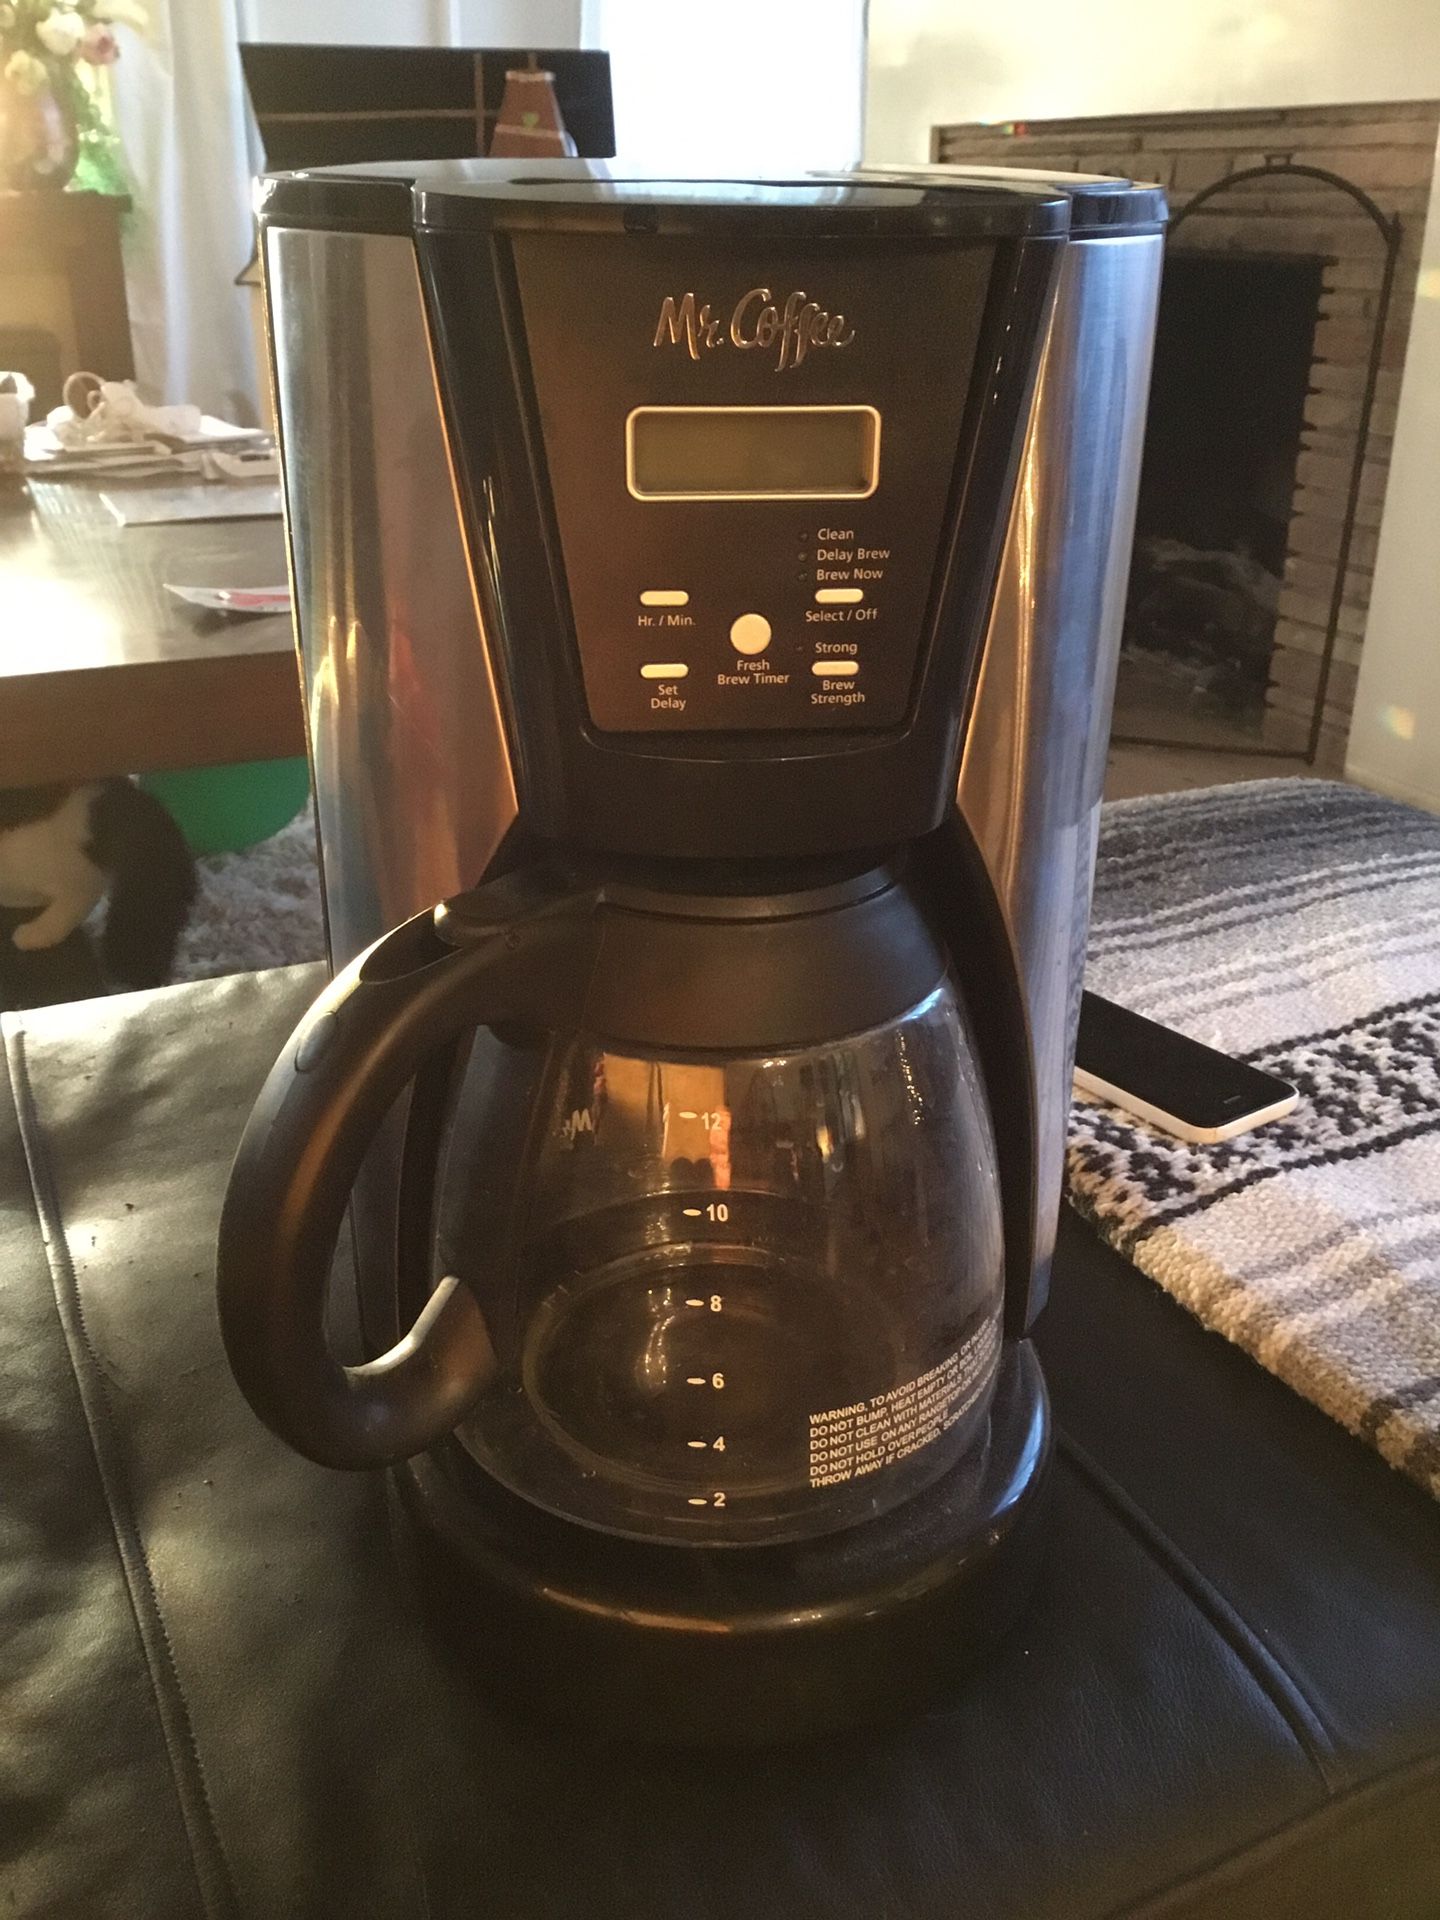 Mr Coffee automatic coffee maker